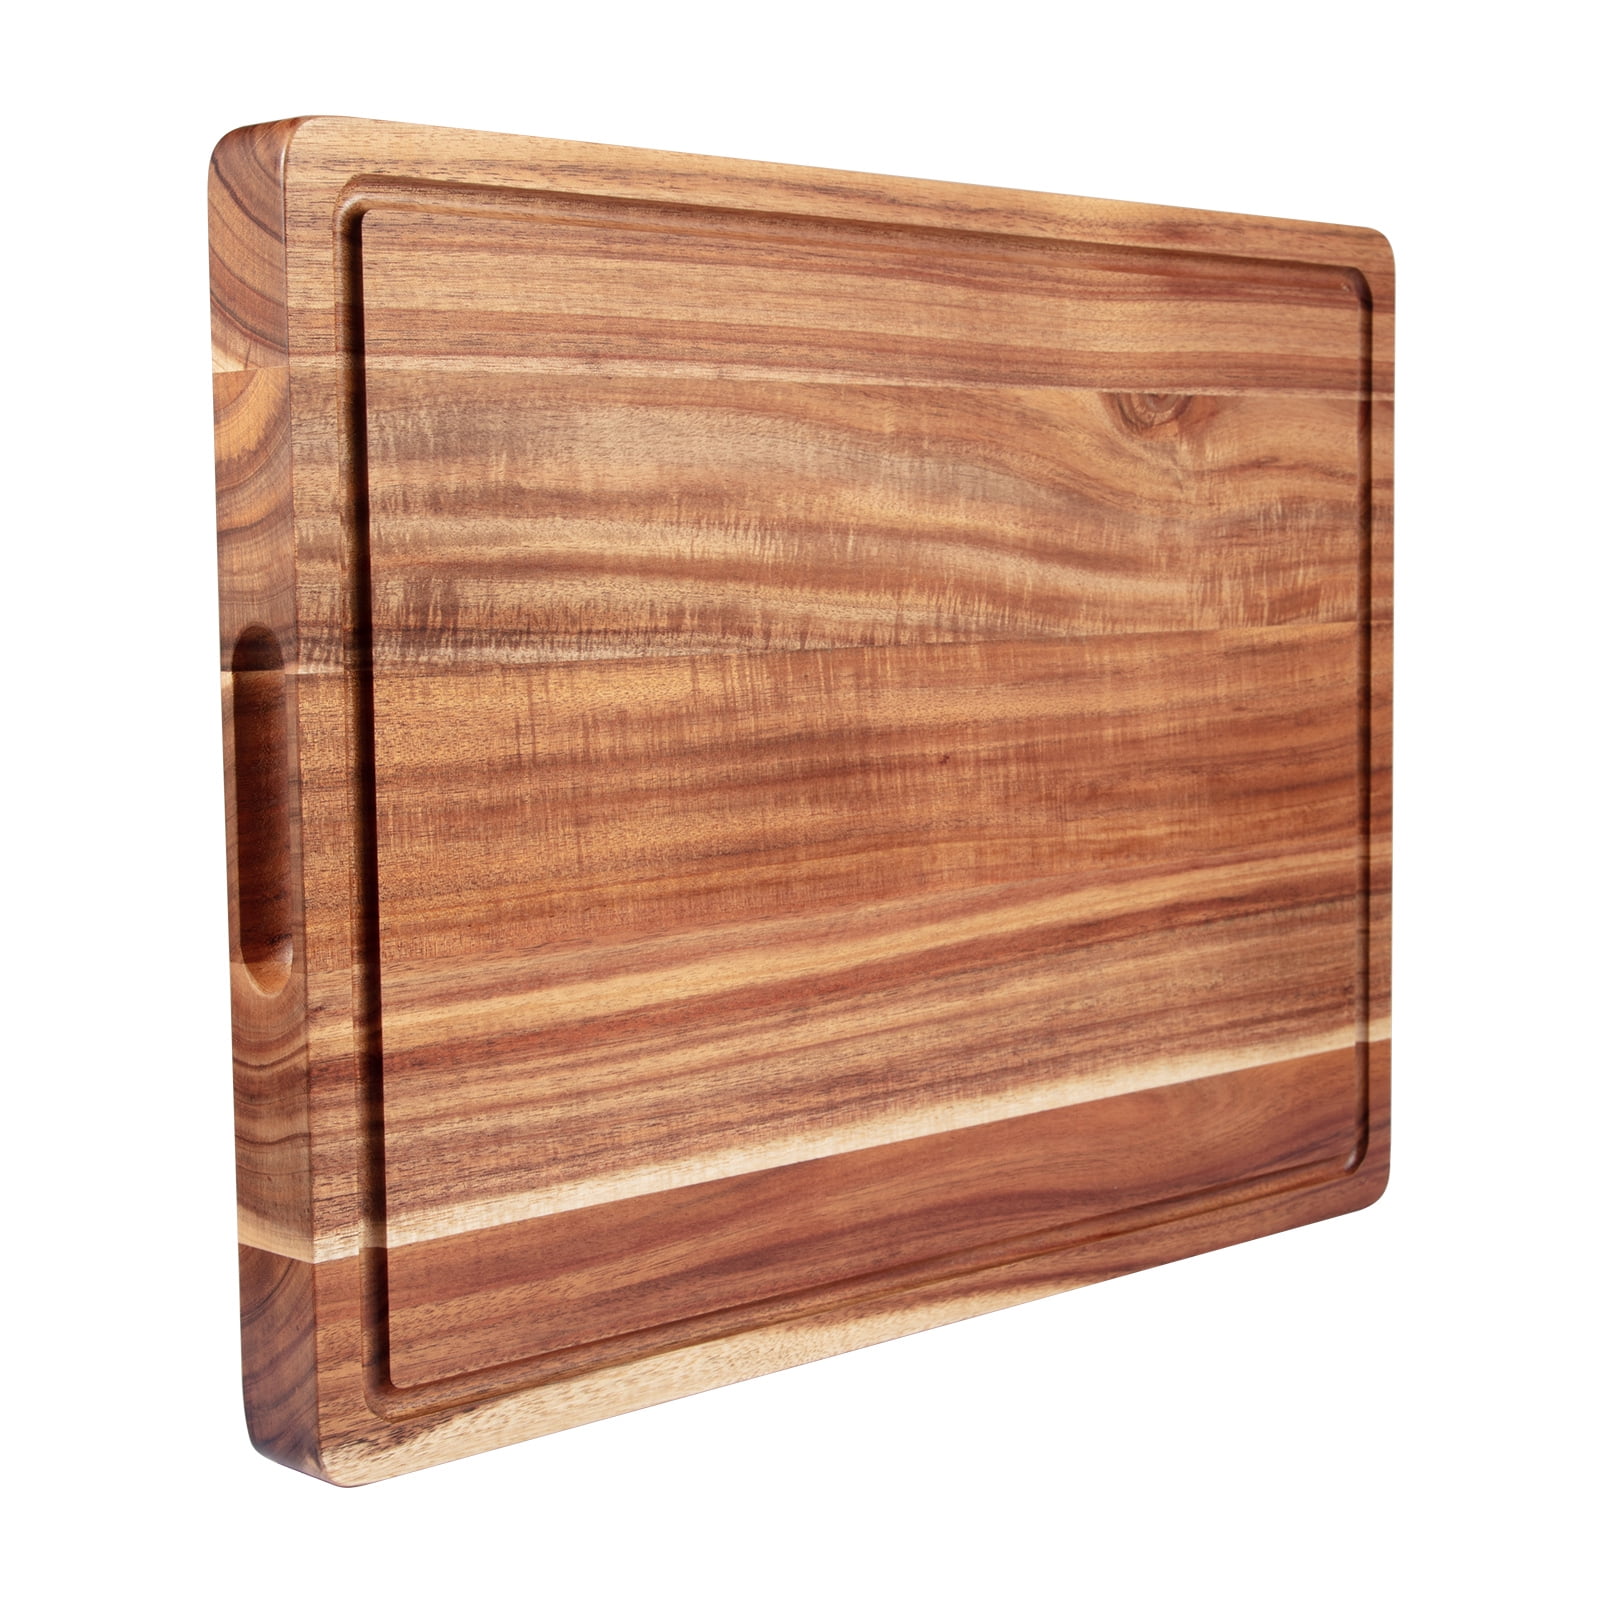 Cutting Board, 18 x 24, 1-3/4 Thick, Wood, Winco WCB-1824